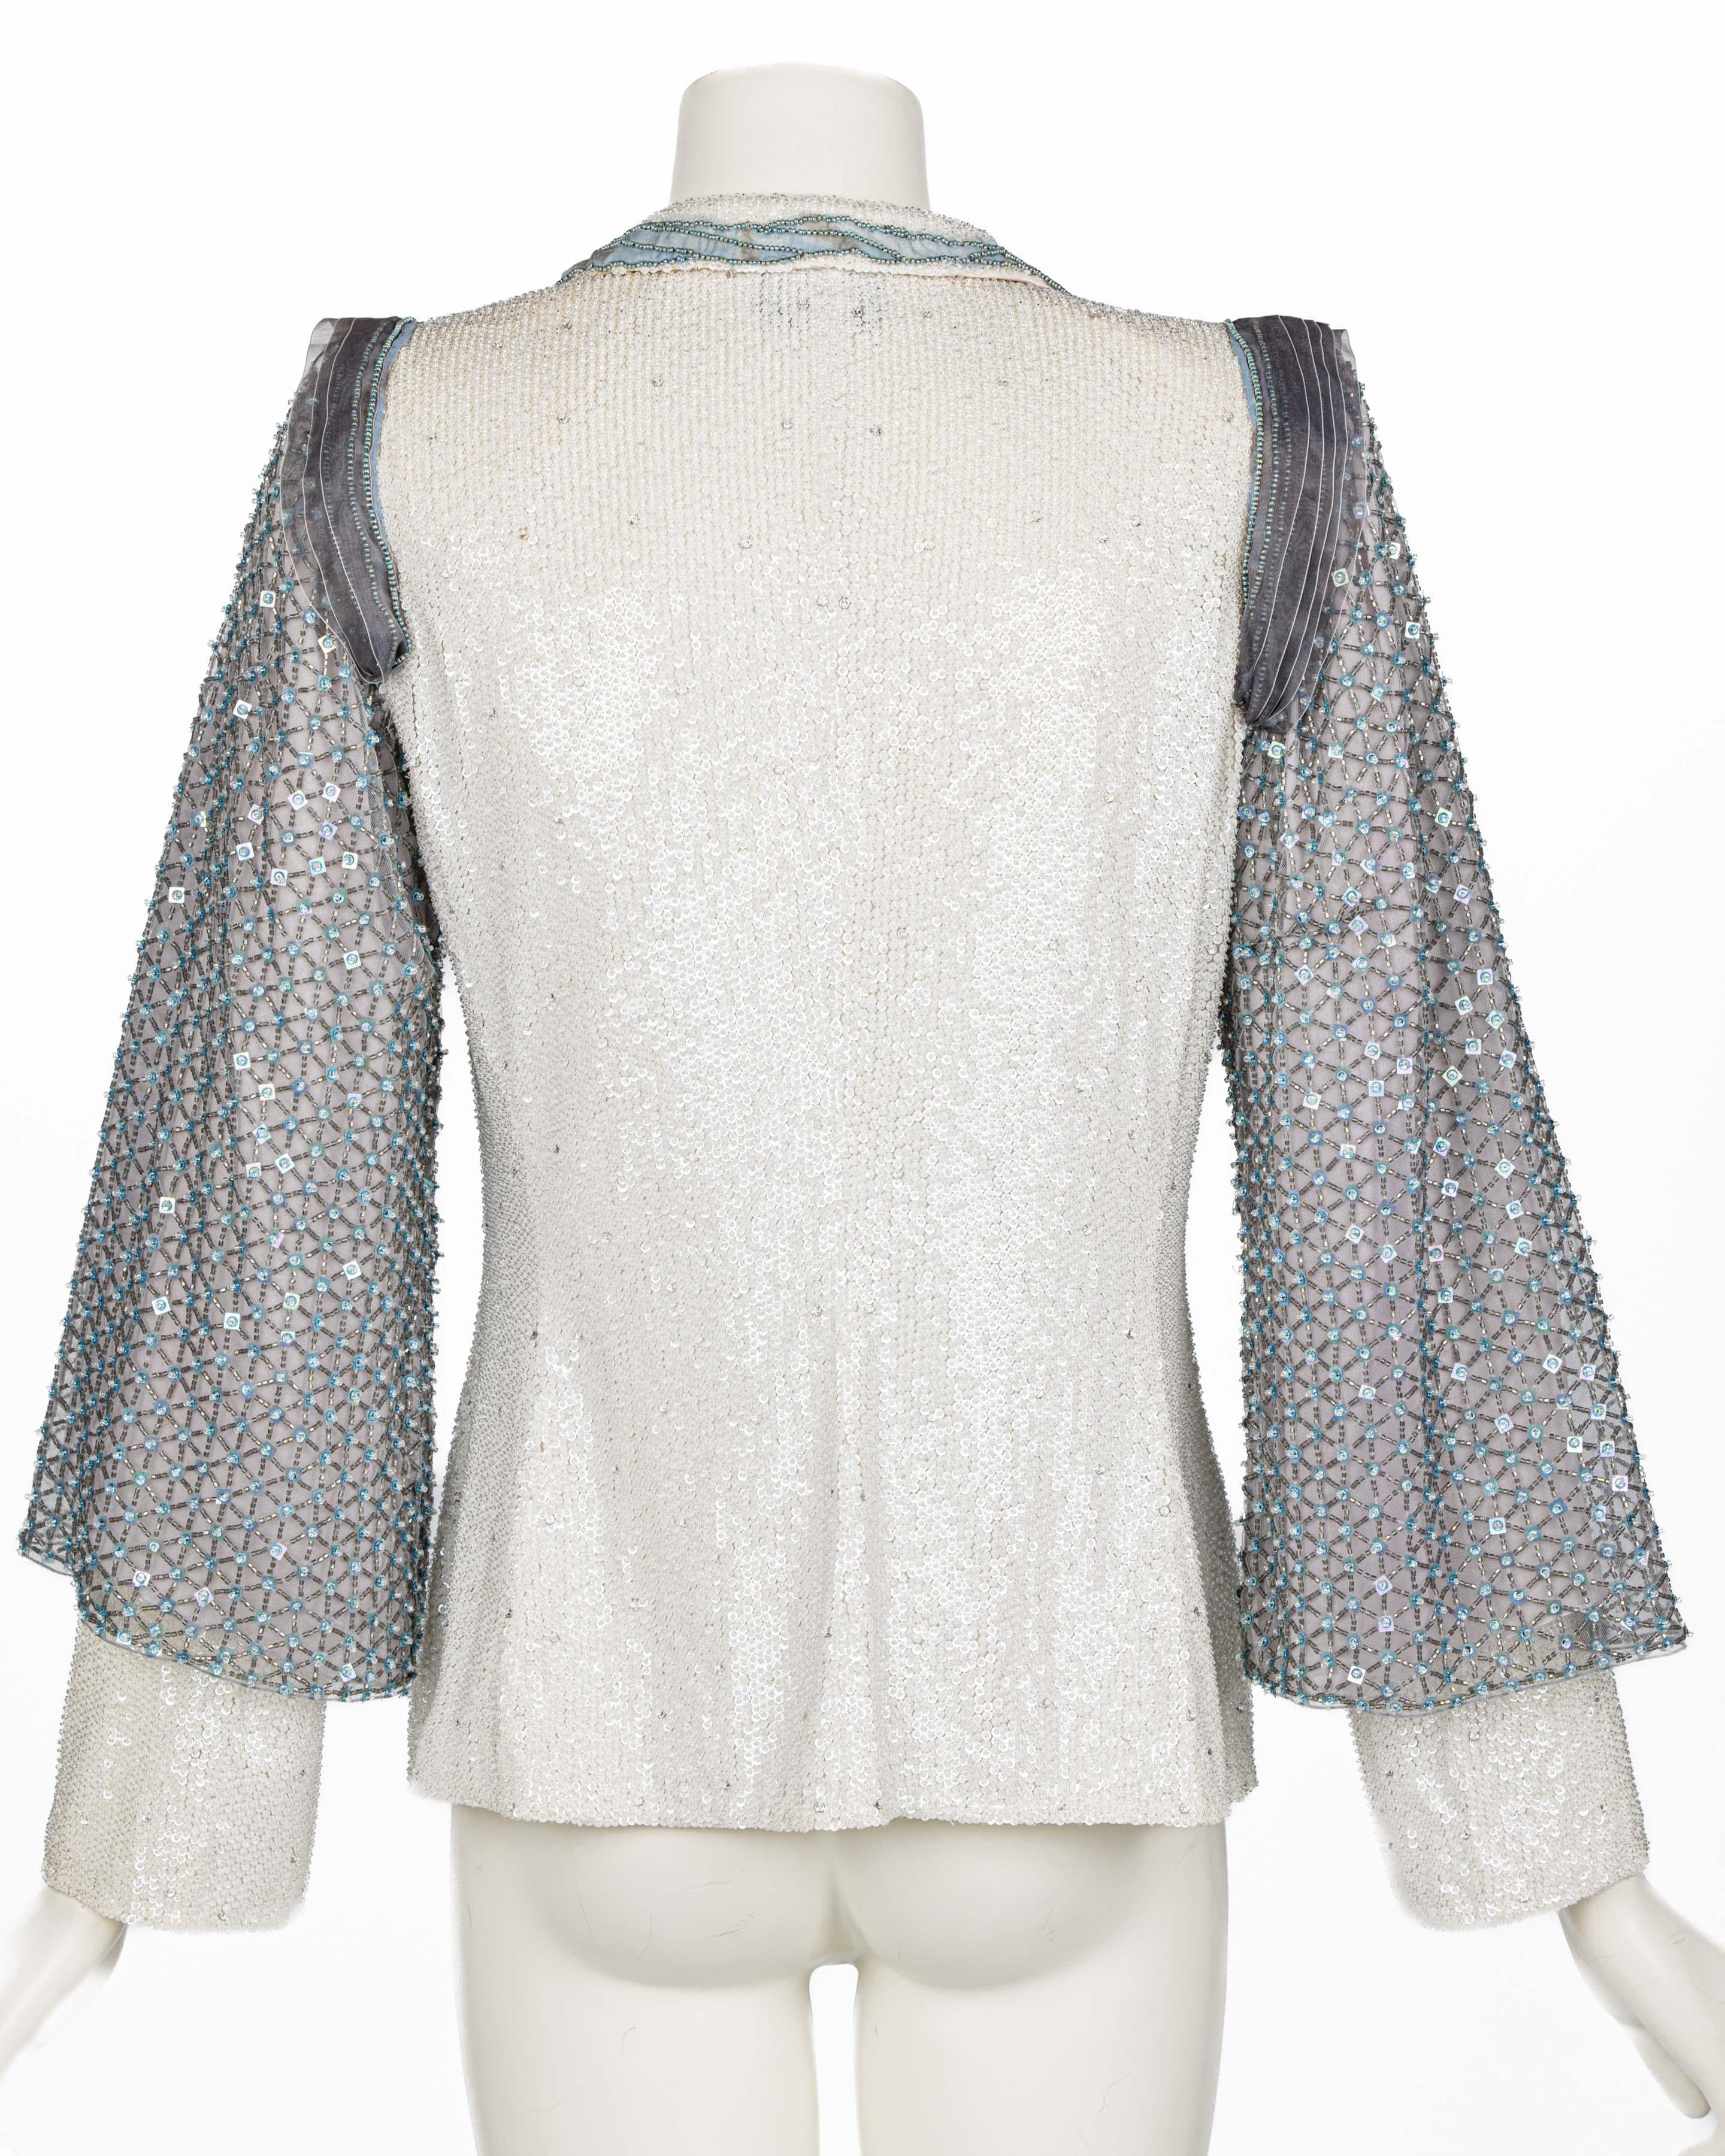 Giorgio Armani Beaded Crystal & Sequin Jacket For Sale 2